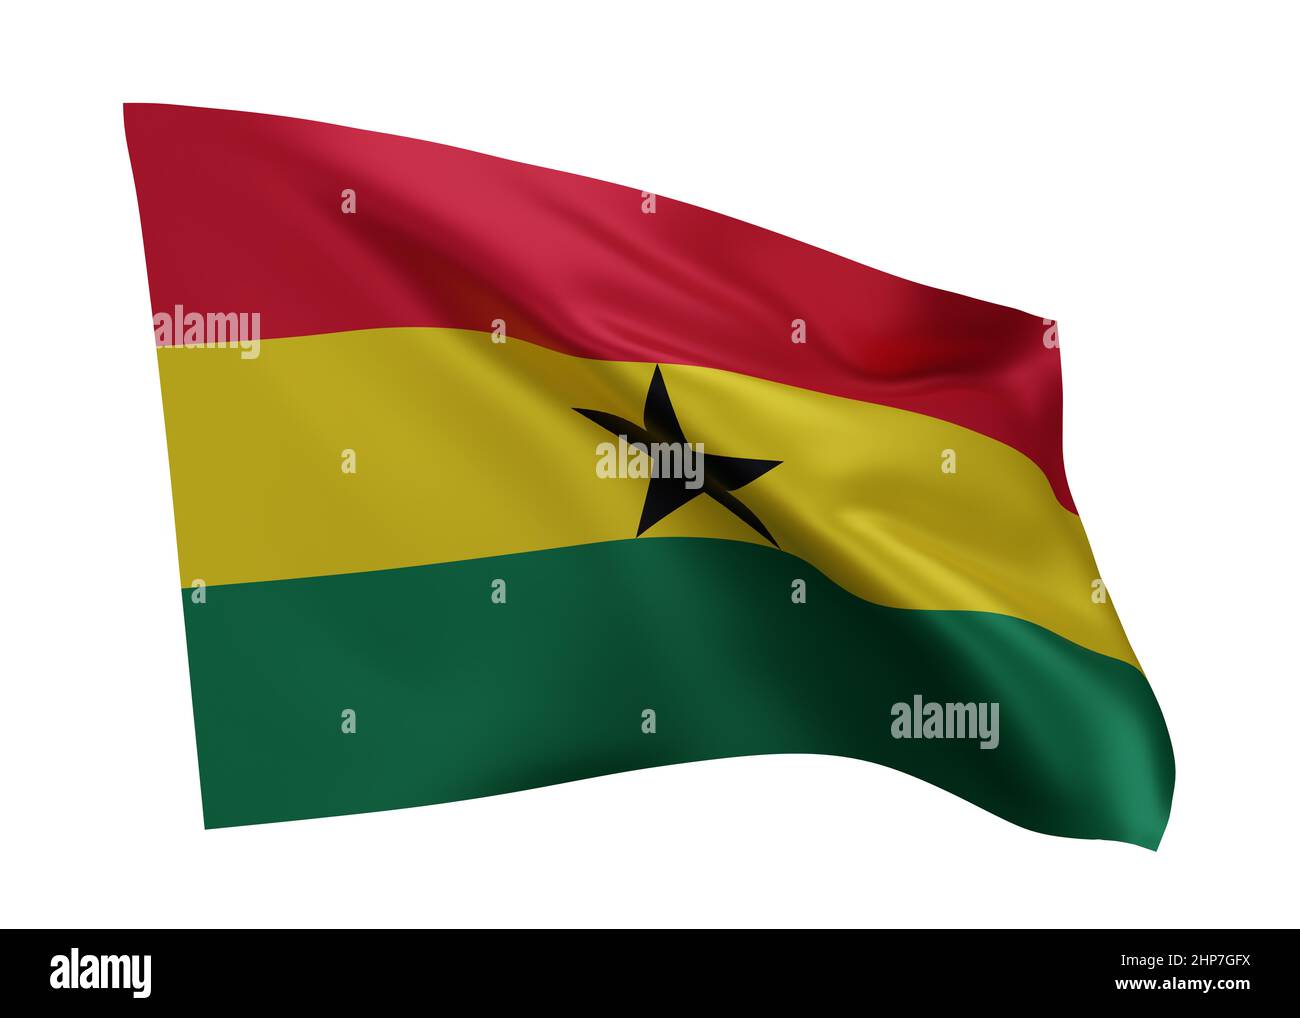 3d illustration flag of Ghana. Ghanaian high resolution flag isolated against white background. 3d rendering Stock Photo